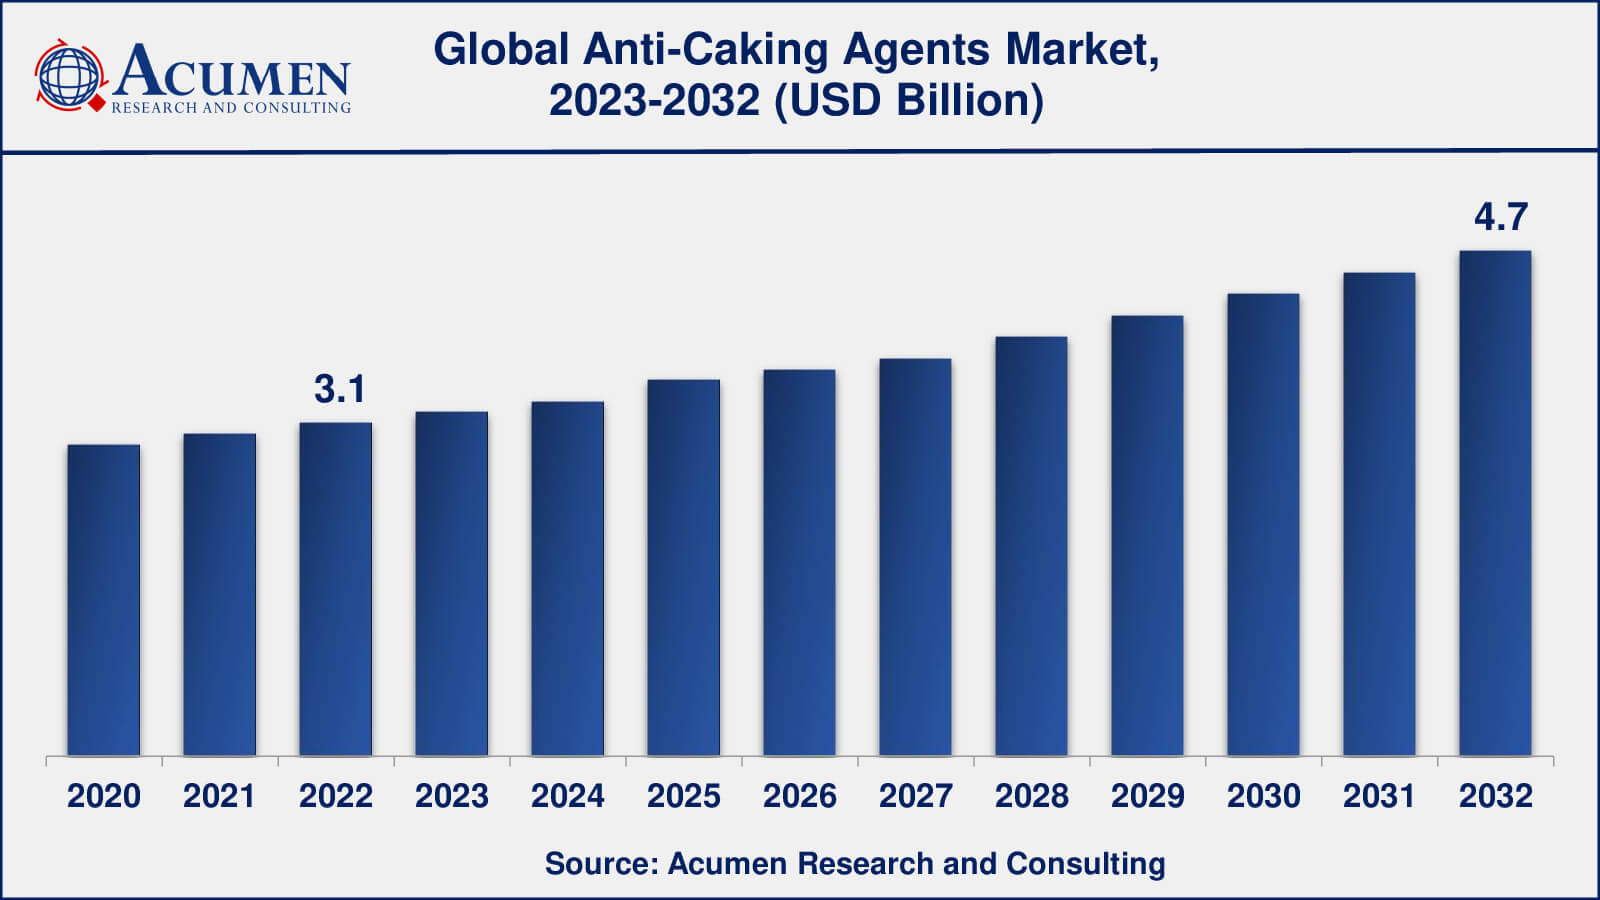 Global Anti-Caking Agents Market Dynamics